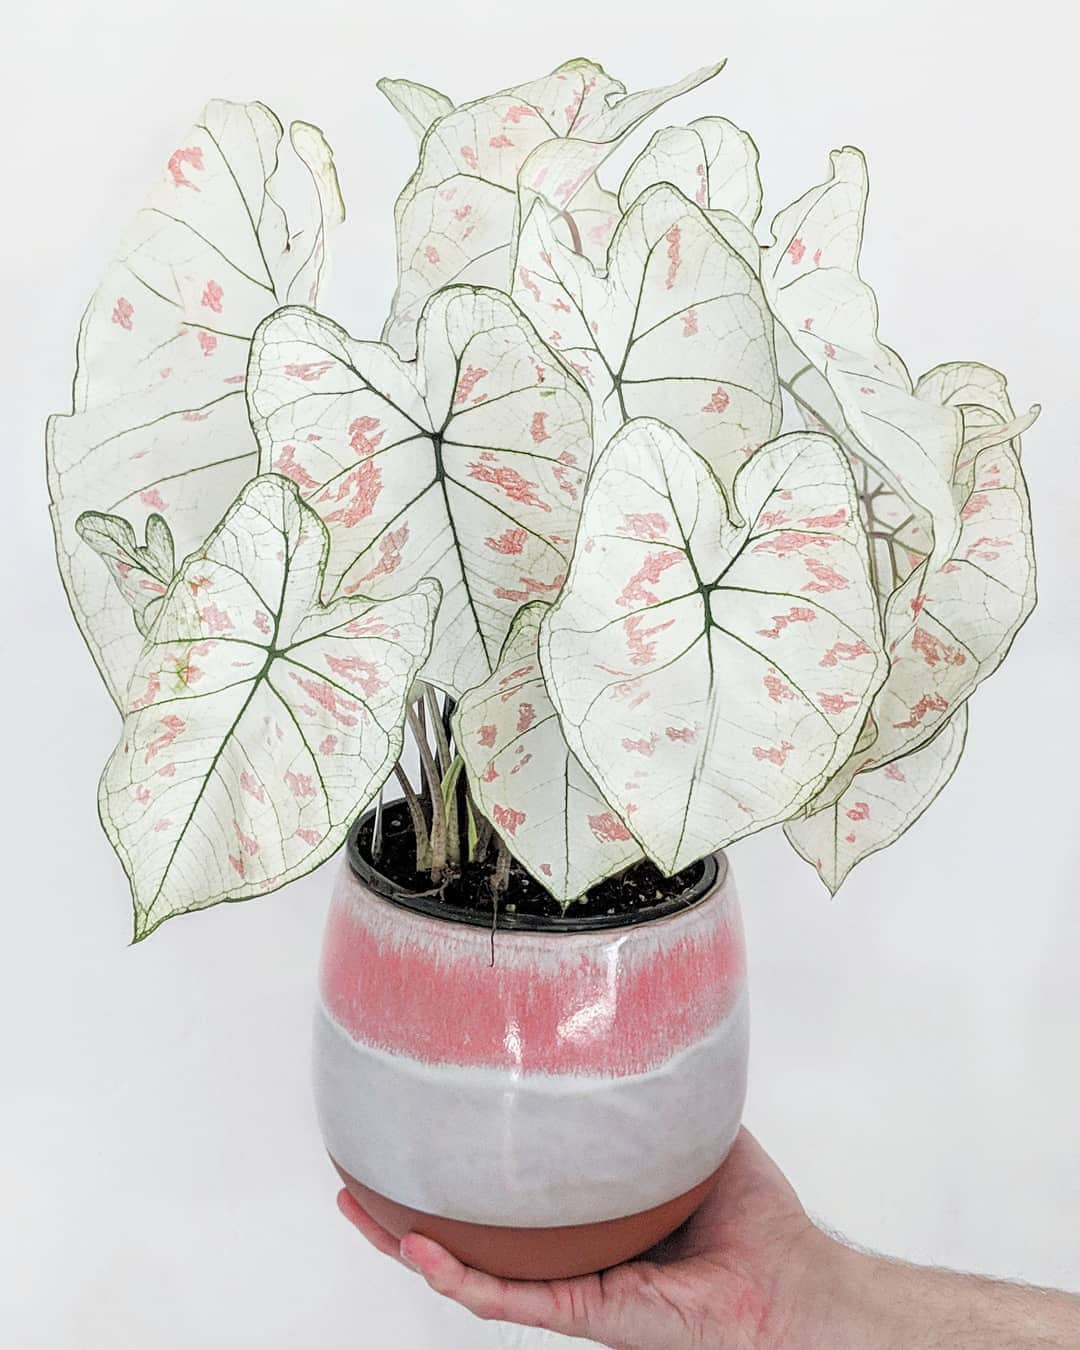 45 Beautiful Indoor Plant Ideas